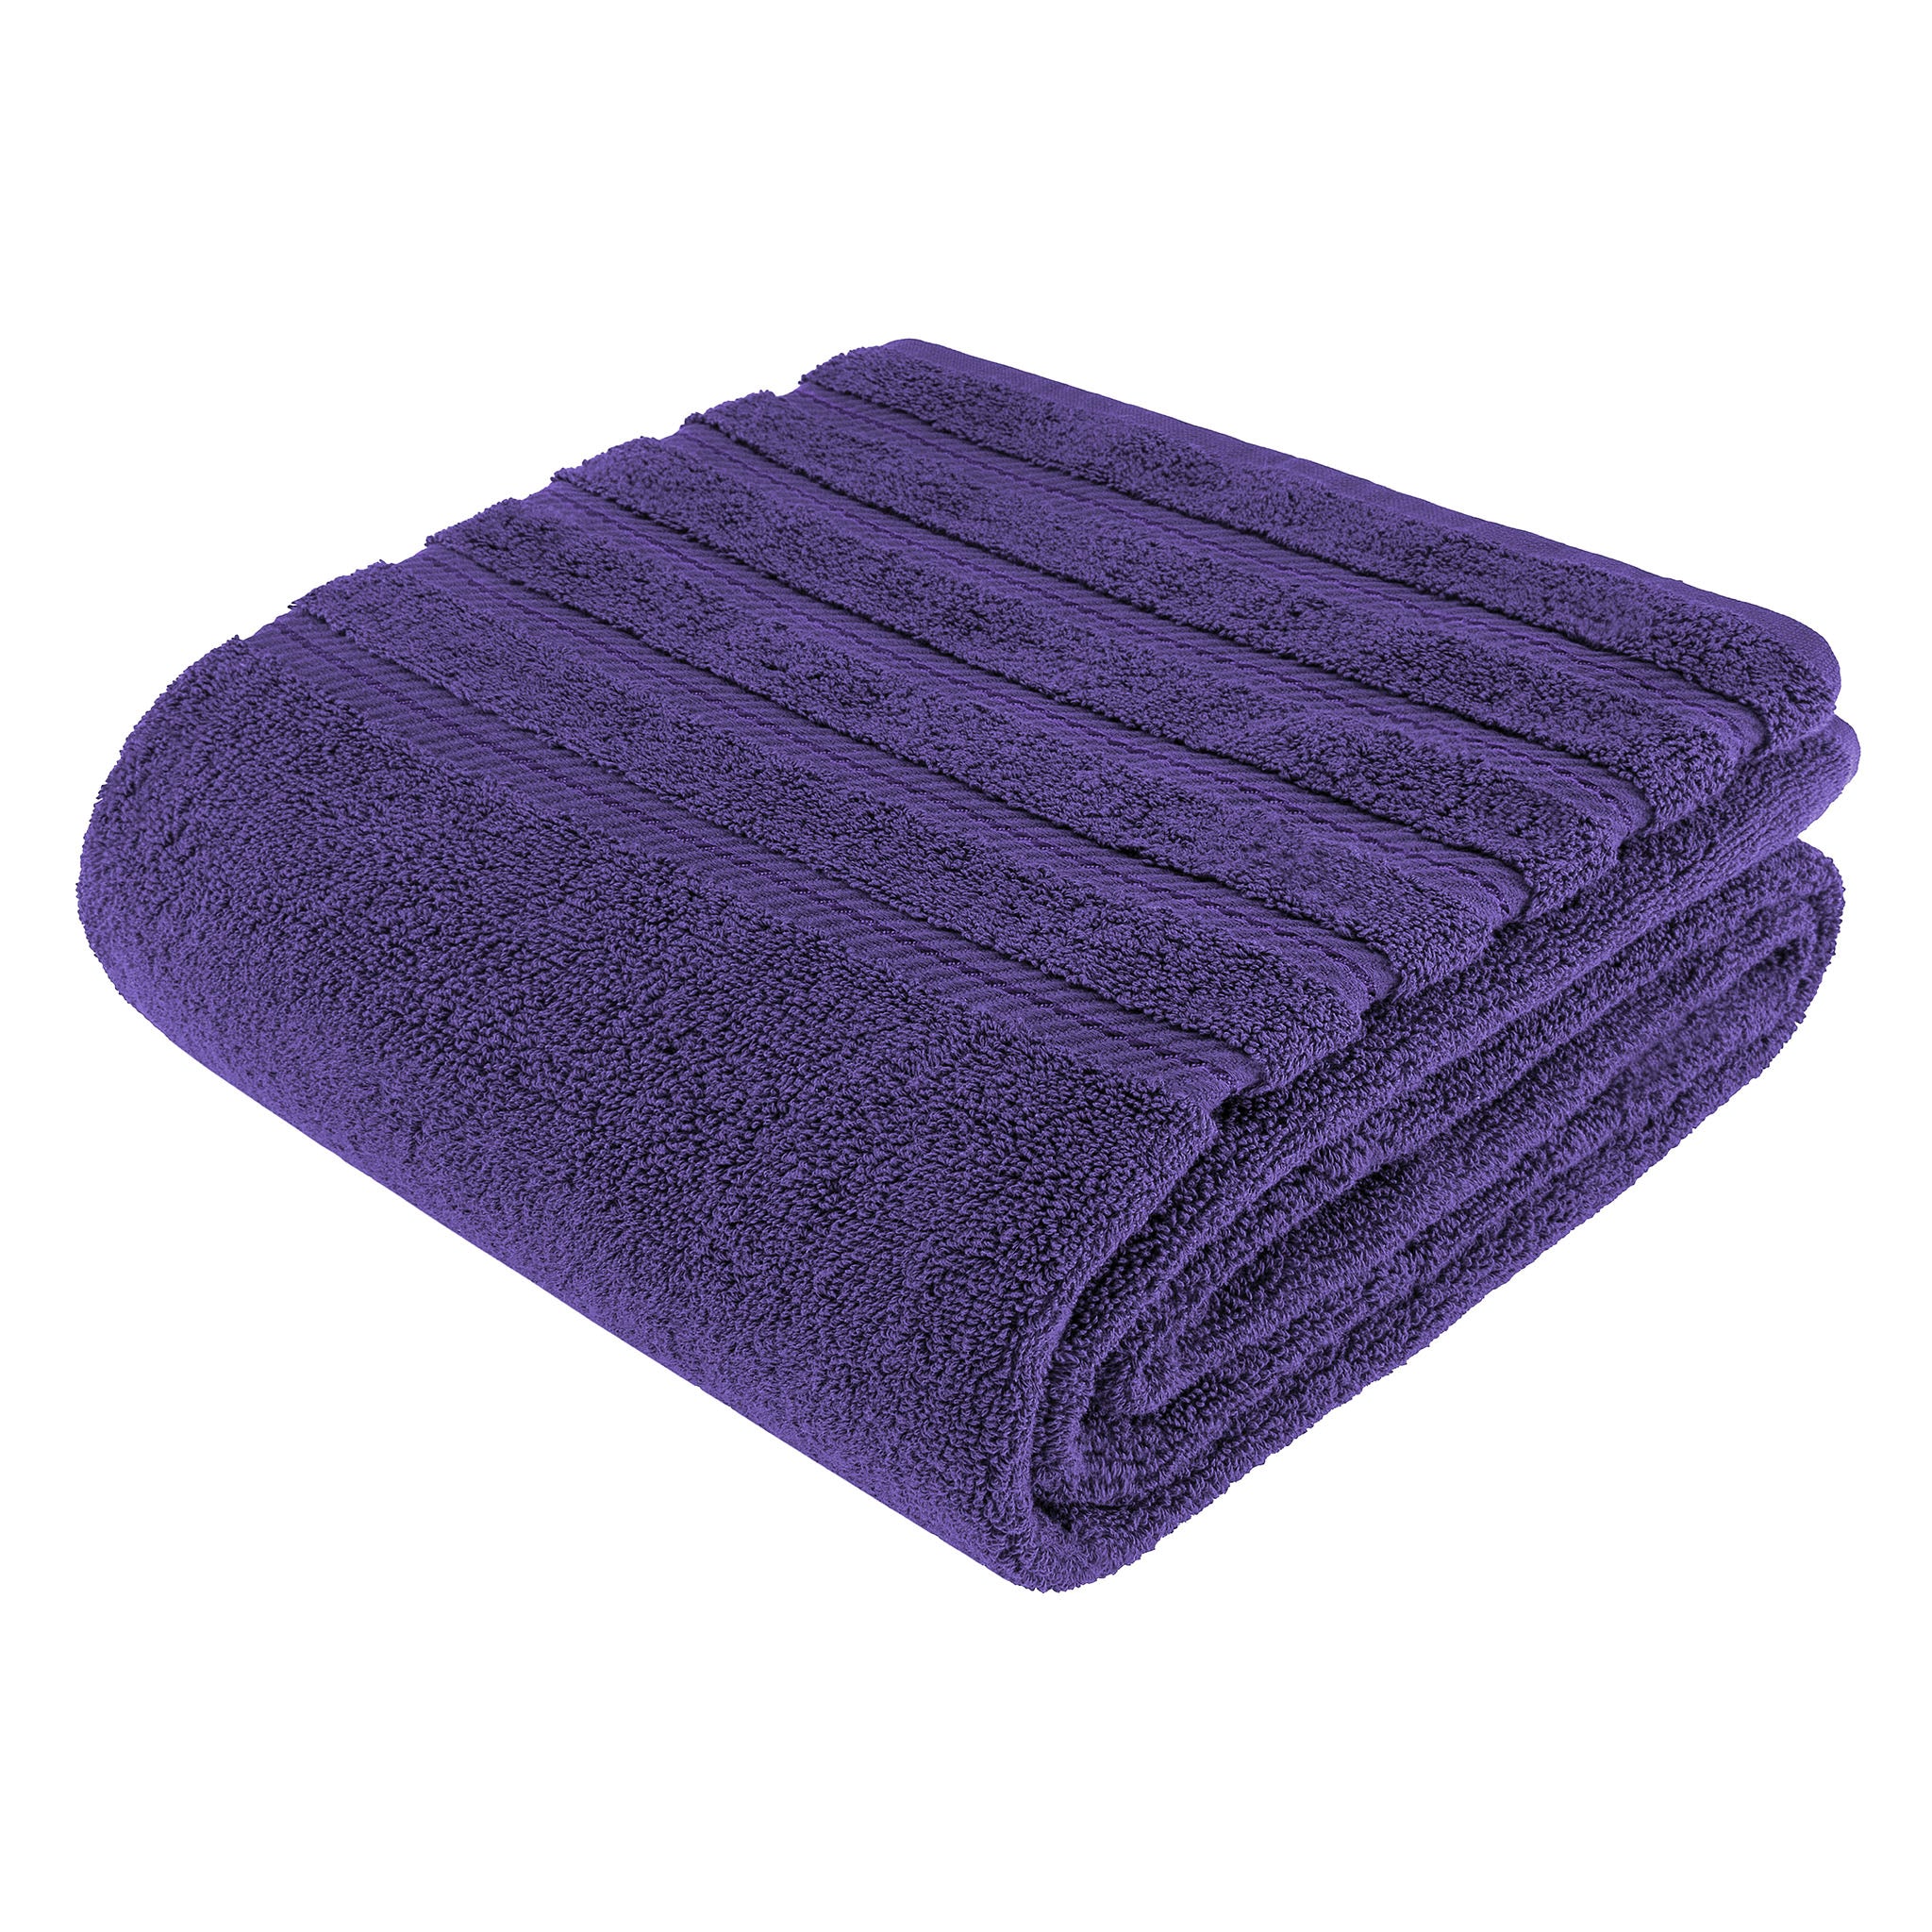 American Soft Linen 35x70 Inch 100% Turkish Cotton Jumbo Bath Sheet purple-7